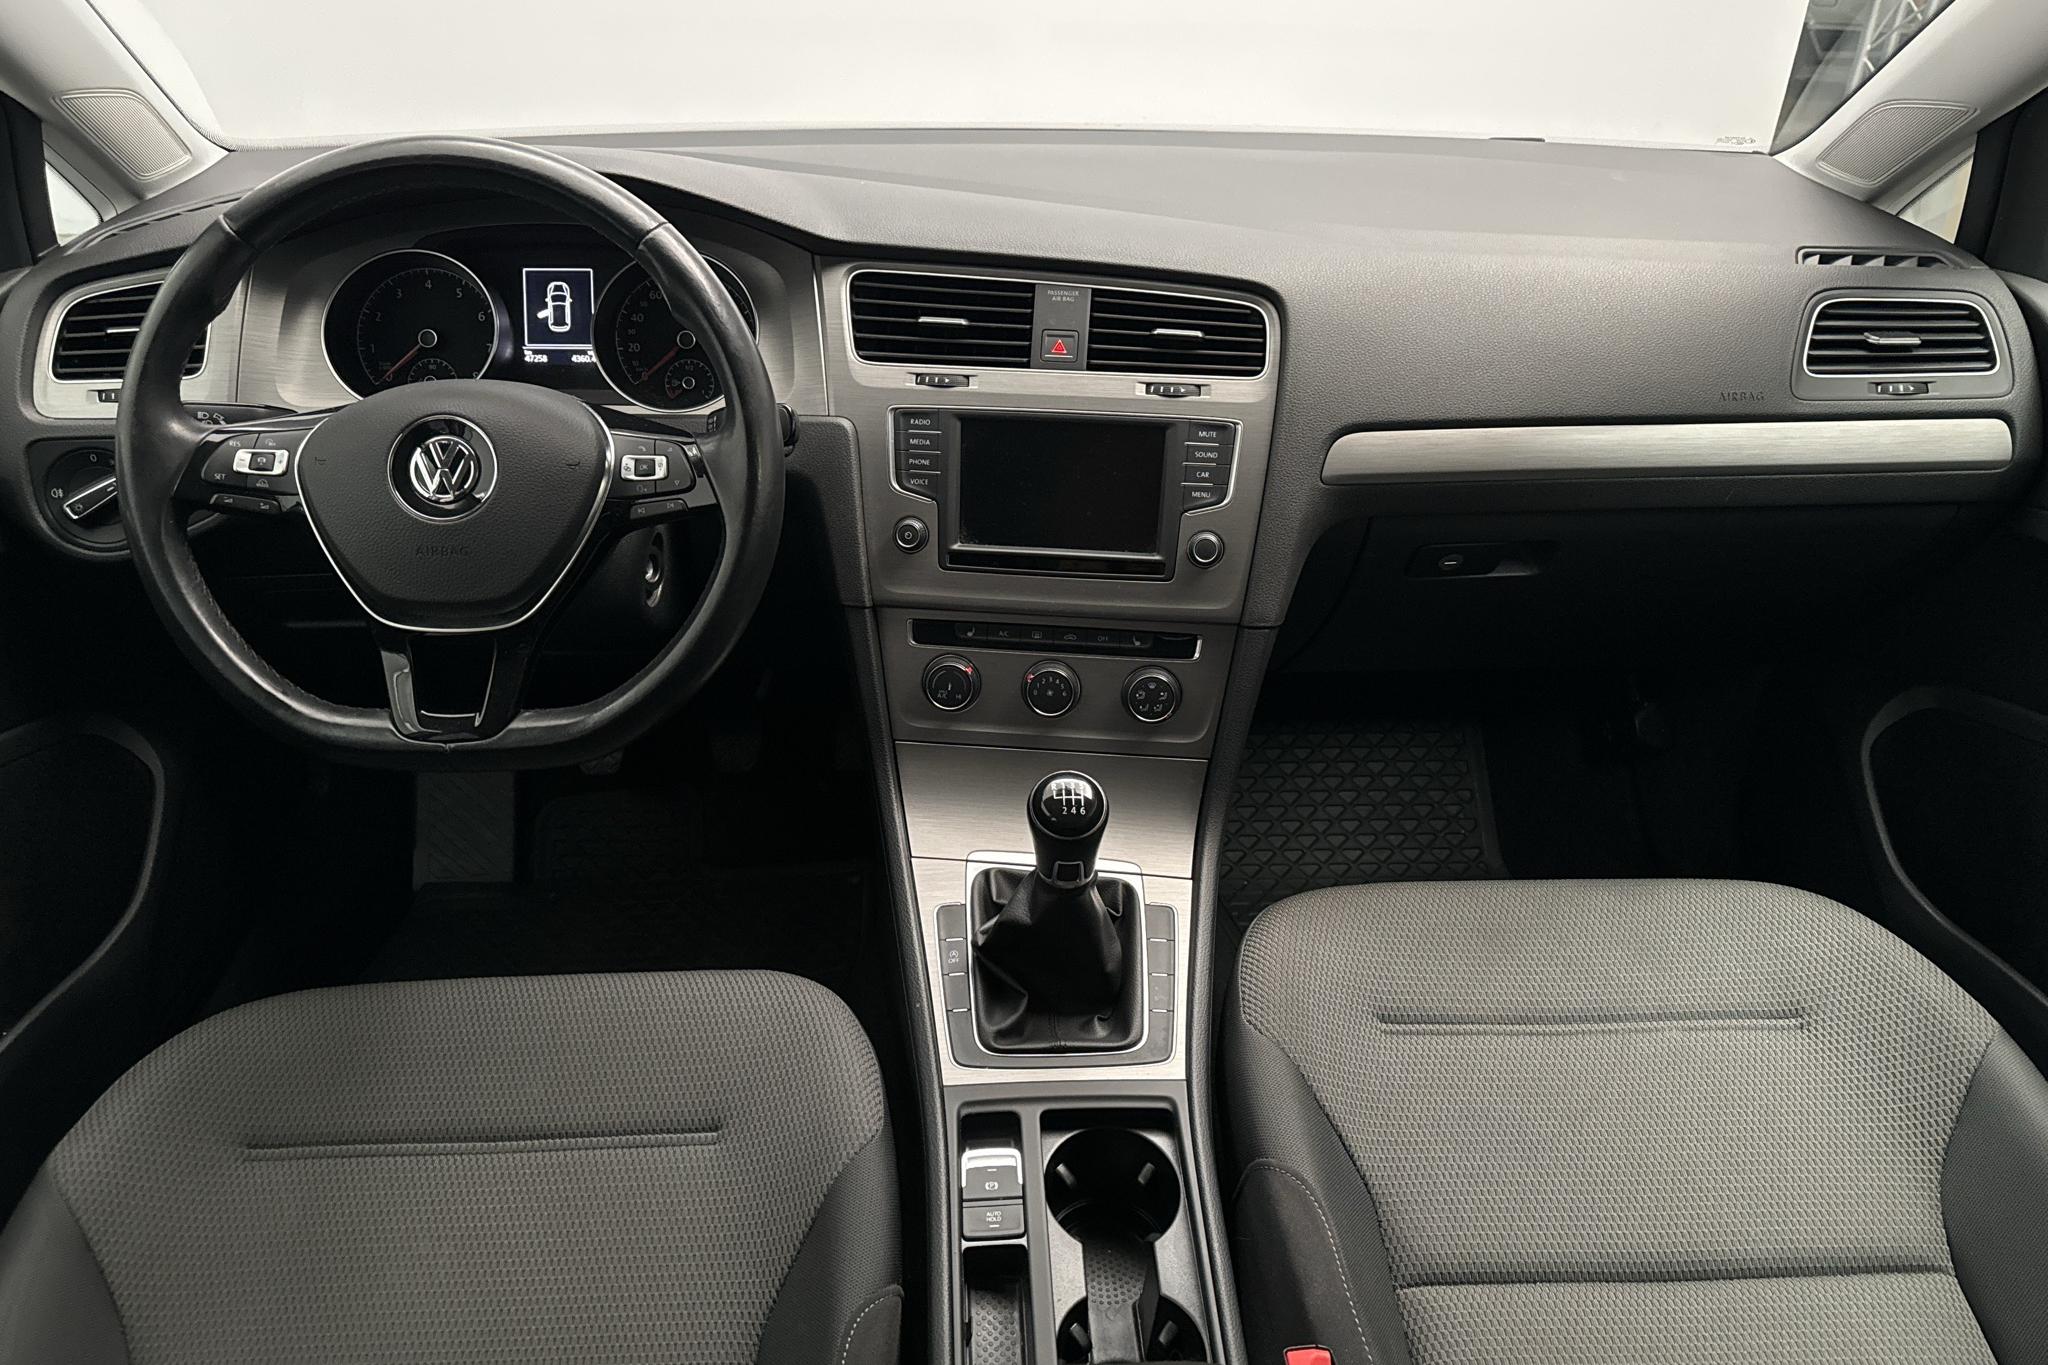 VW Golf VII 1.2 TSI 5dr (110hk) - 47 250 km - Manual - gray - 2016